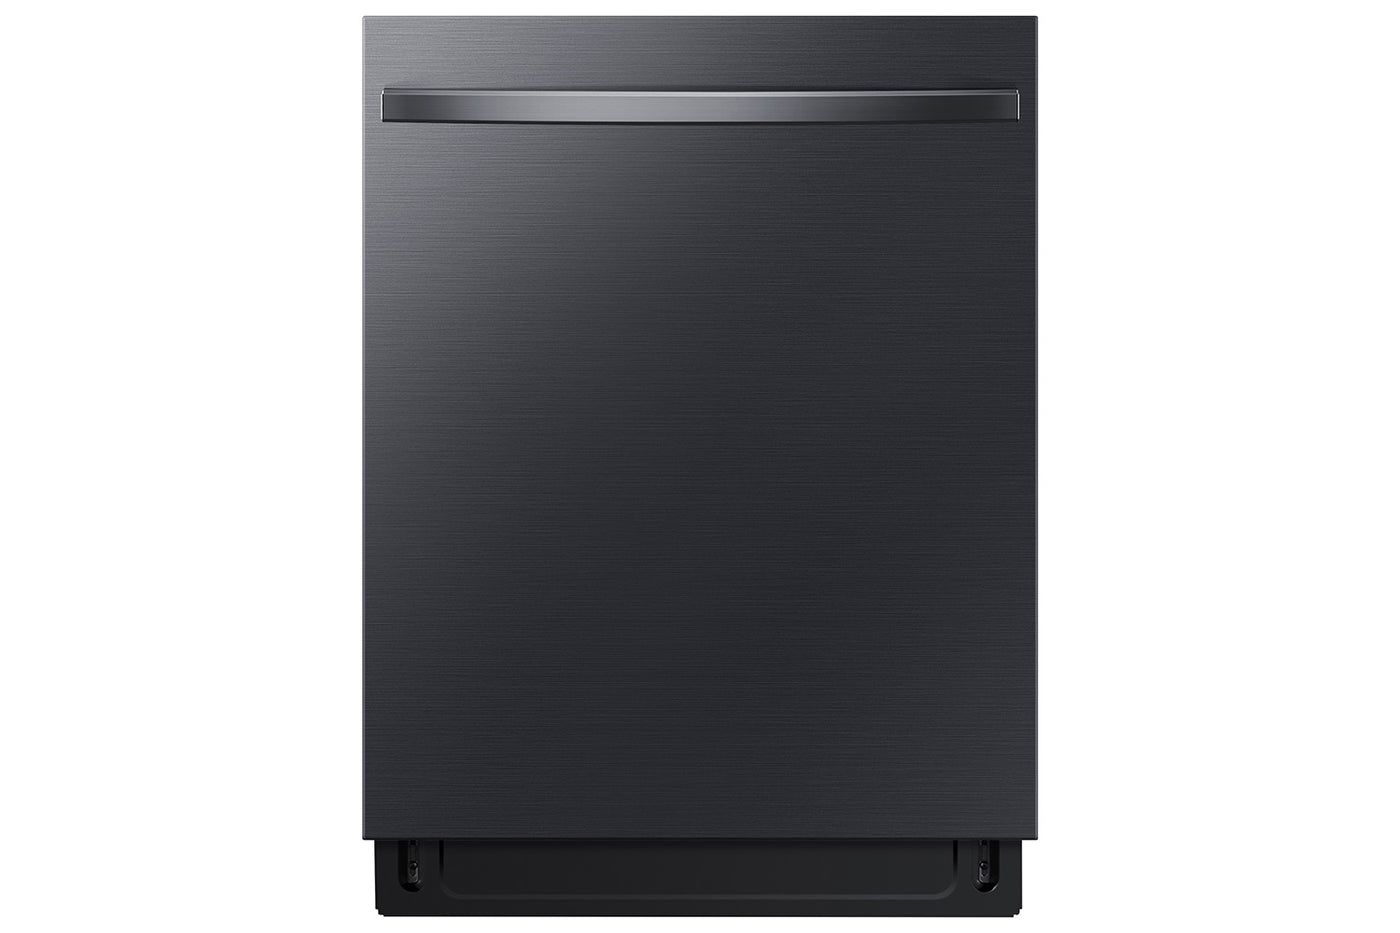 Samsung Matte Black Steel 3rd Rack Dishwasher - DW80CG5451MTAA